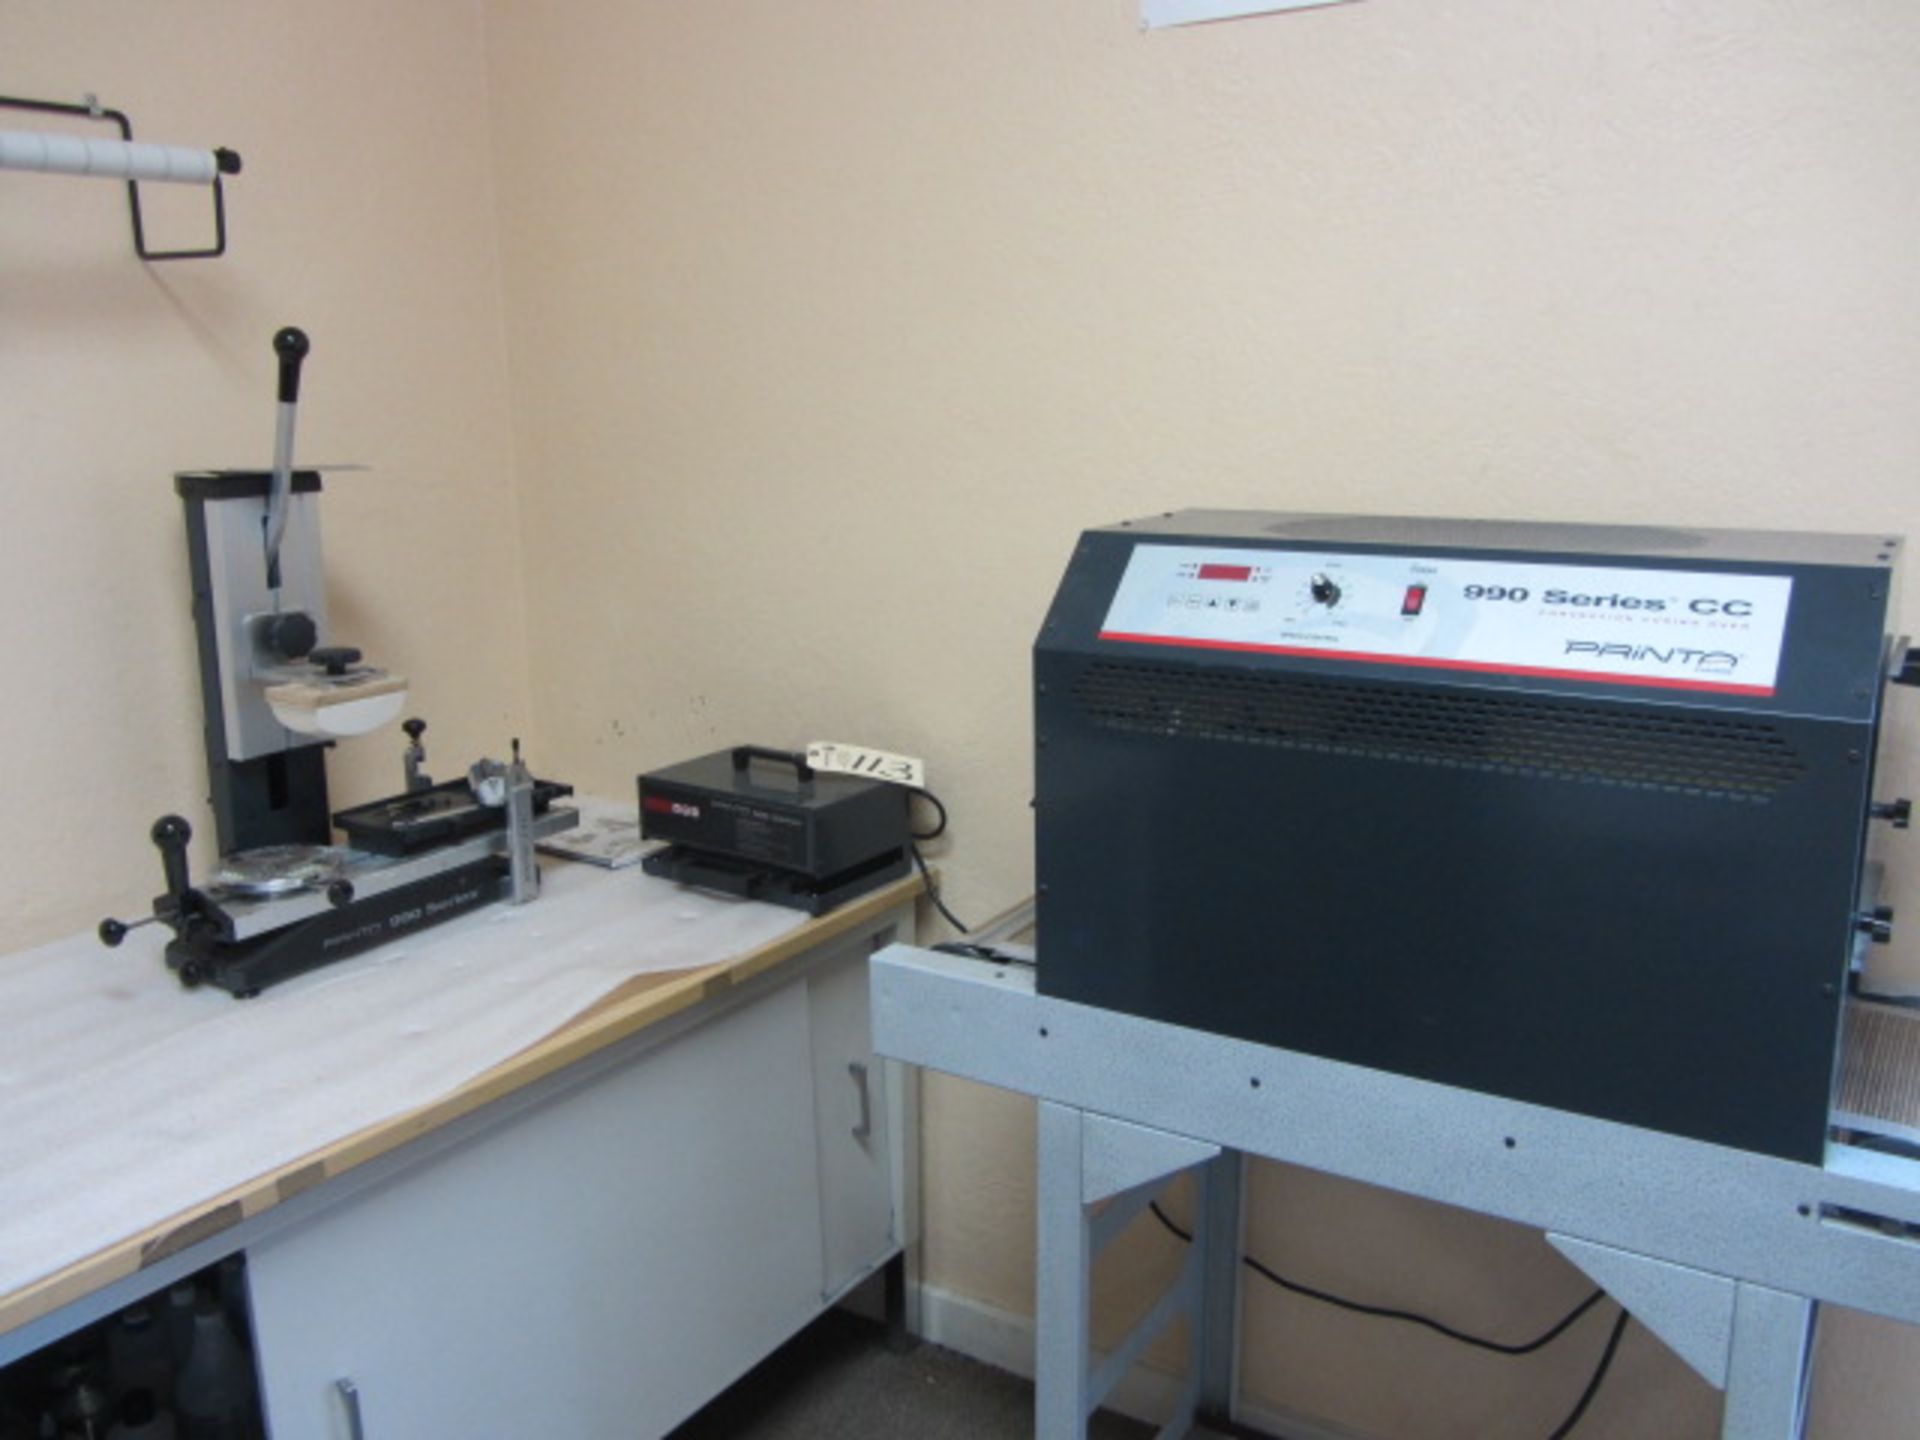 990 Printa Platinum Pad Printing System including 990 Series Pad Printer, 990 Series CC-Convection - Image 4 of 5